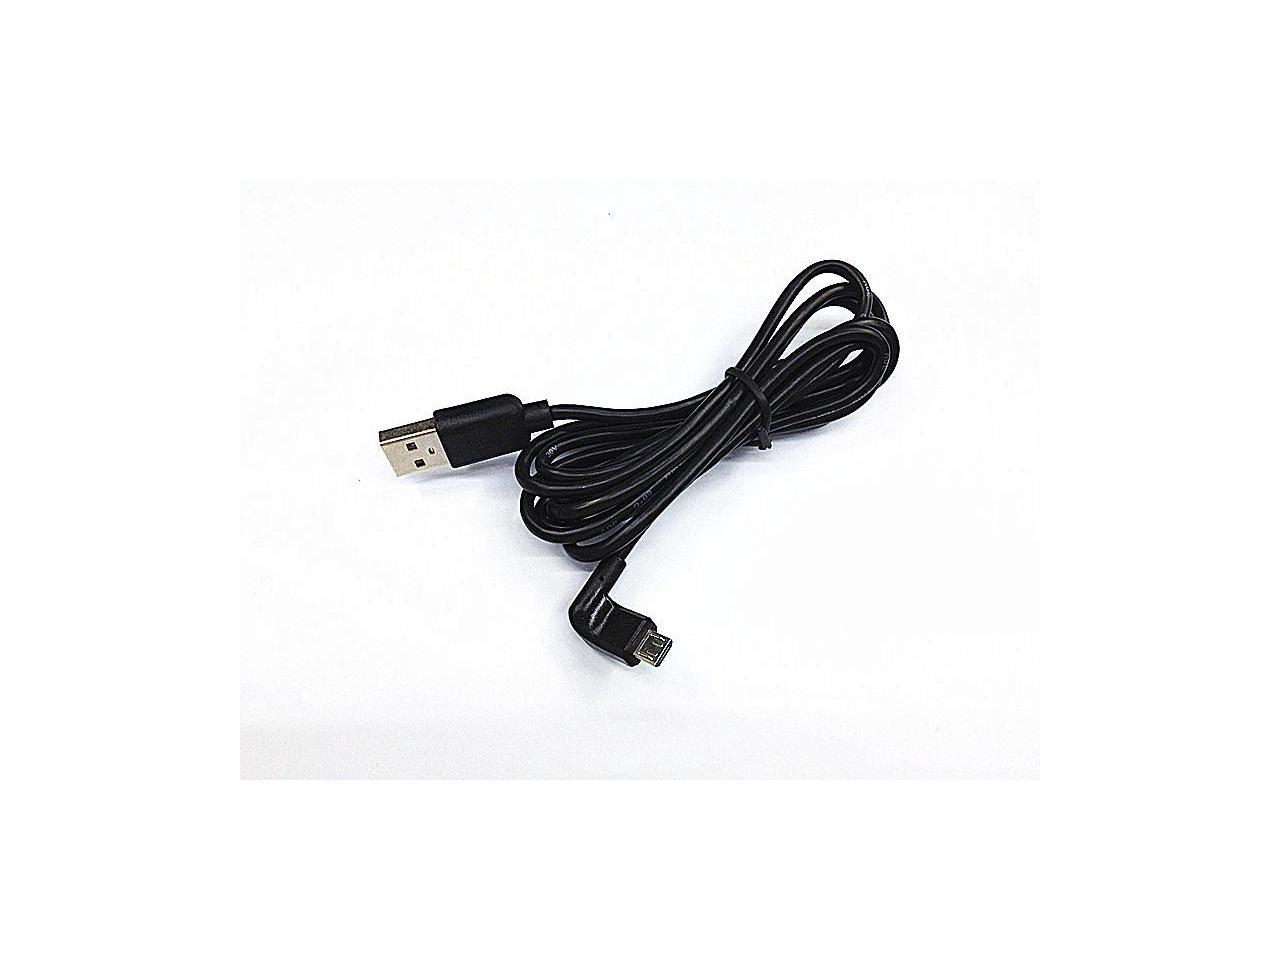 Charger Black Cable for Garmin Nuvi Nulink 1695 GPS SatNav 2m USB Data 